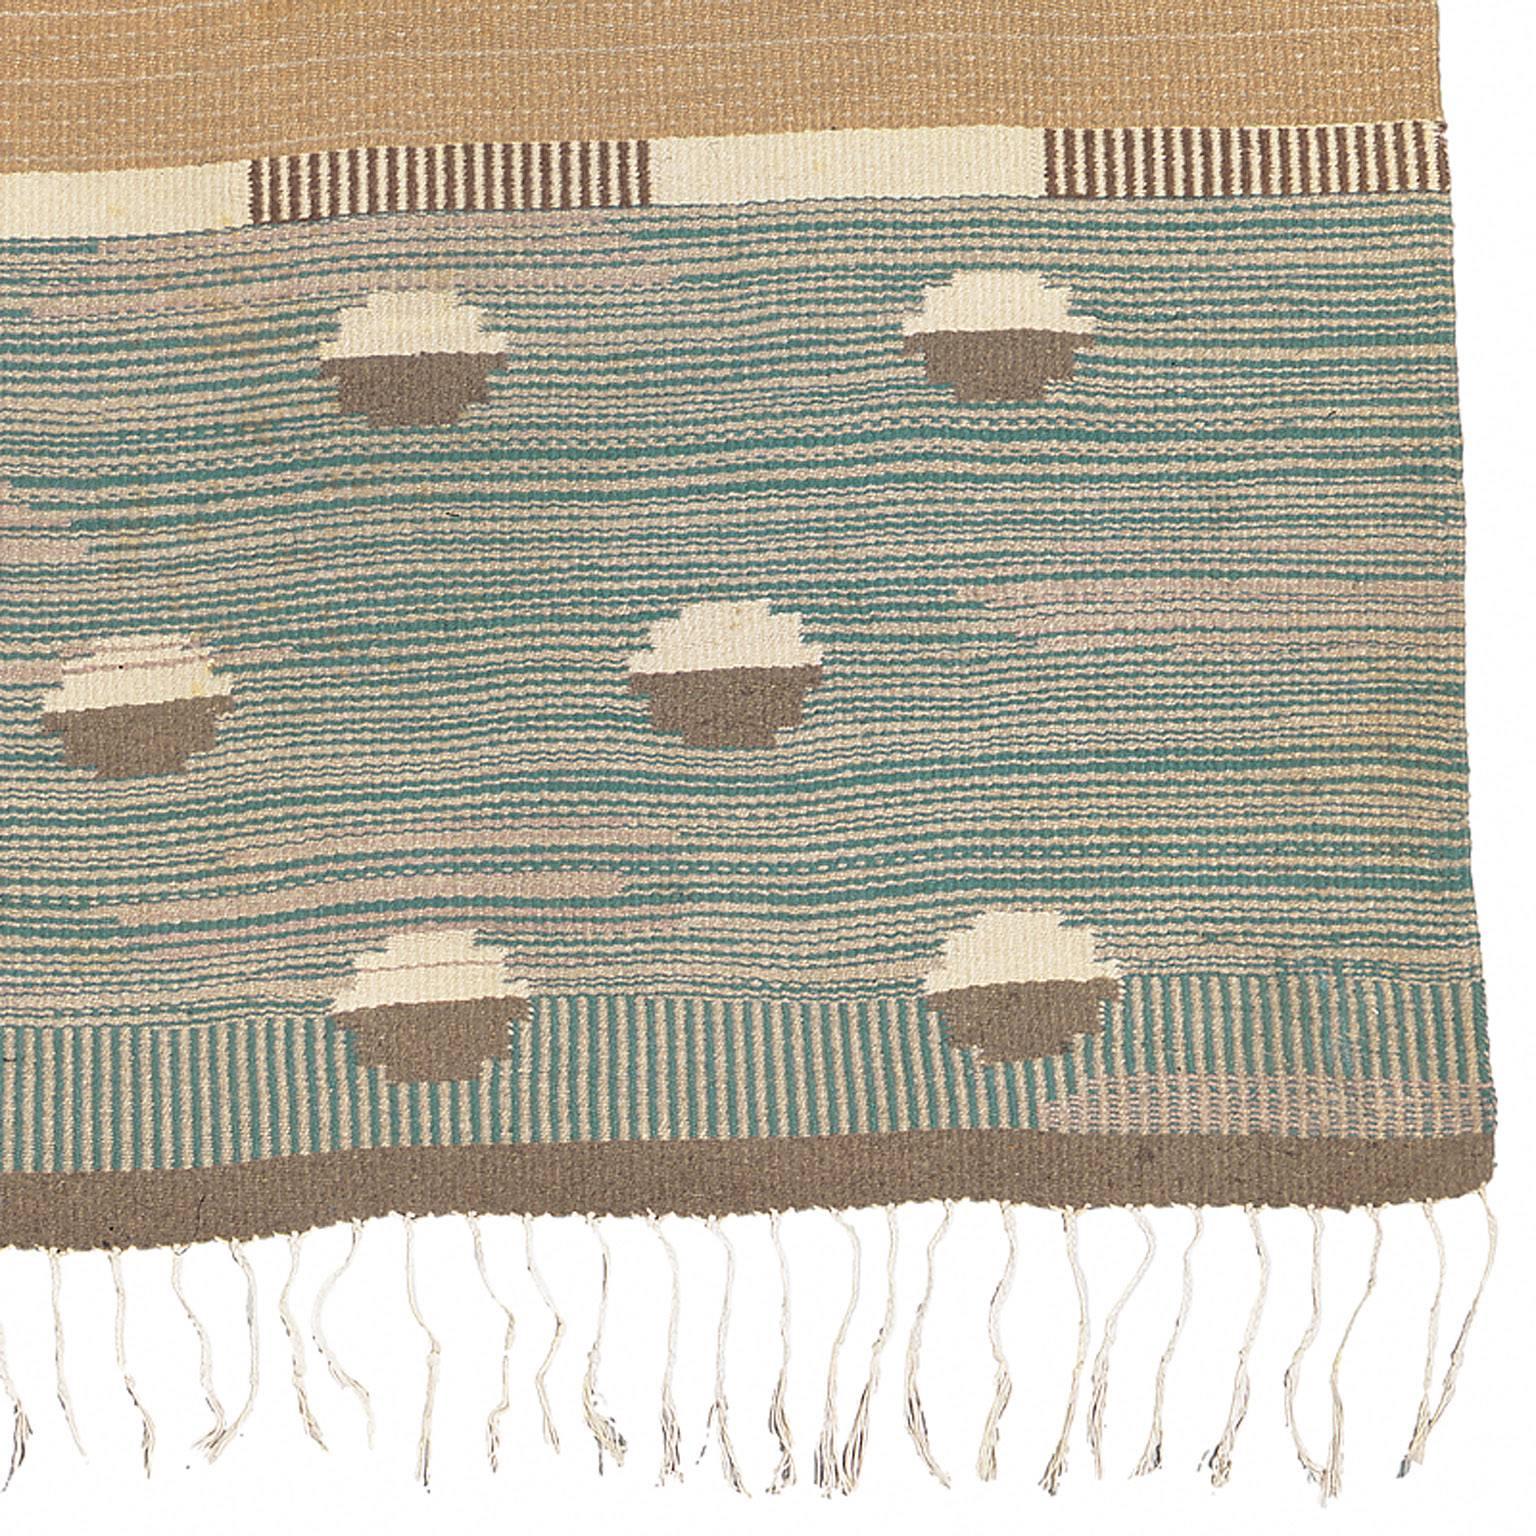 Finnish flat-weave.
Attributed: GS (Greta Skogster).
Handwoven